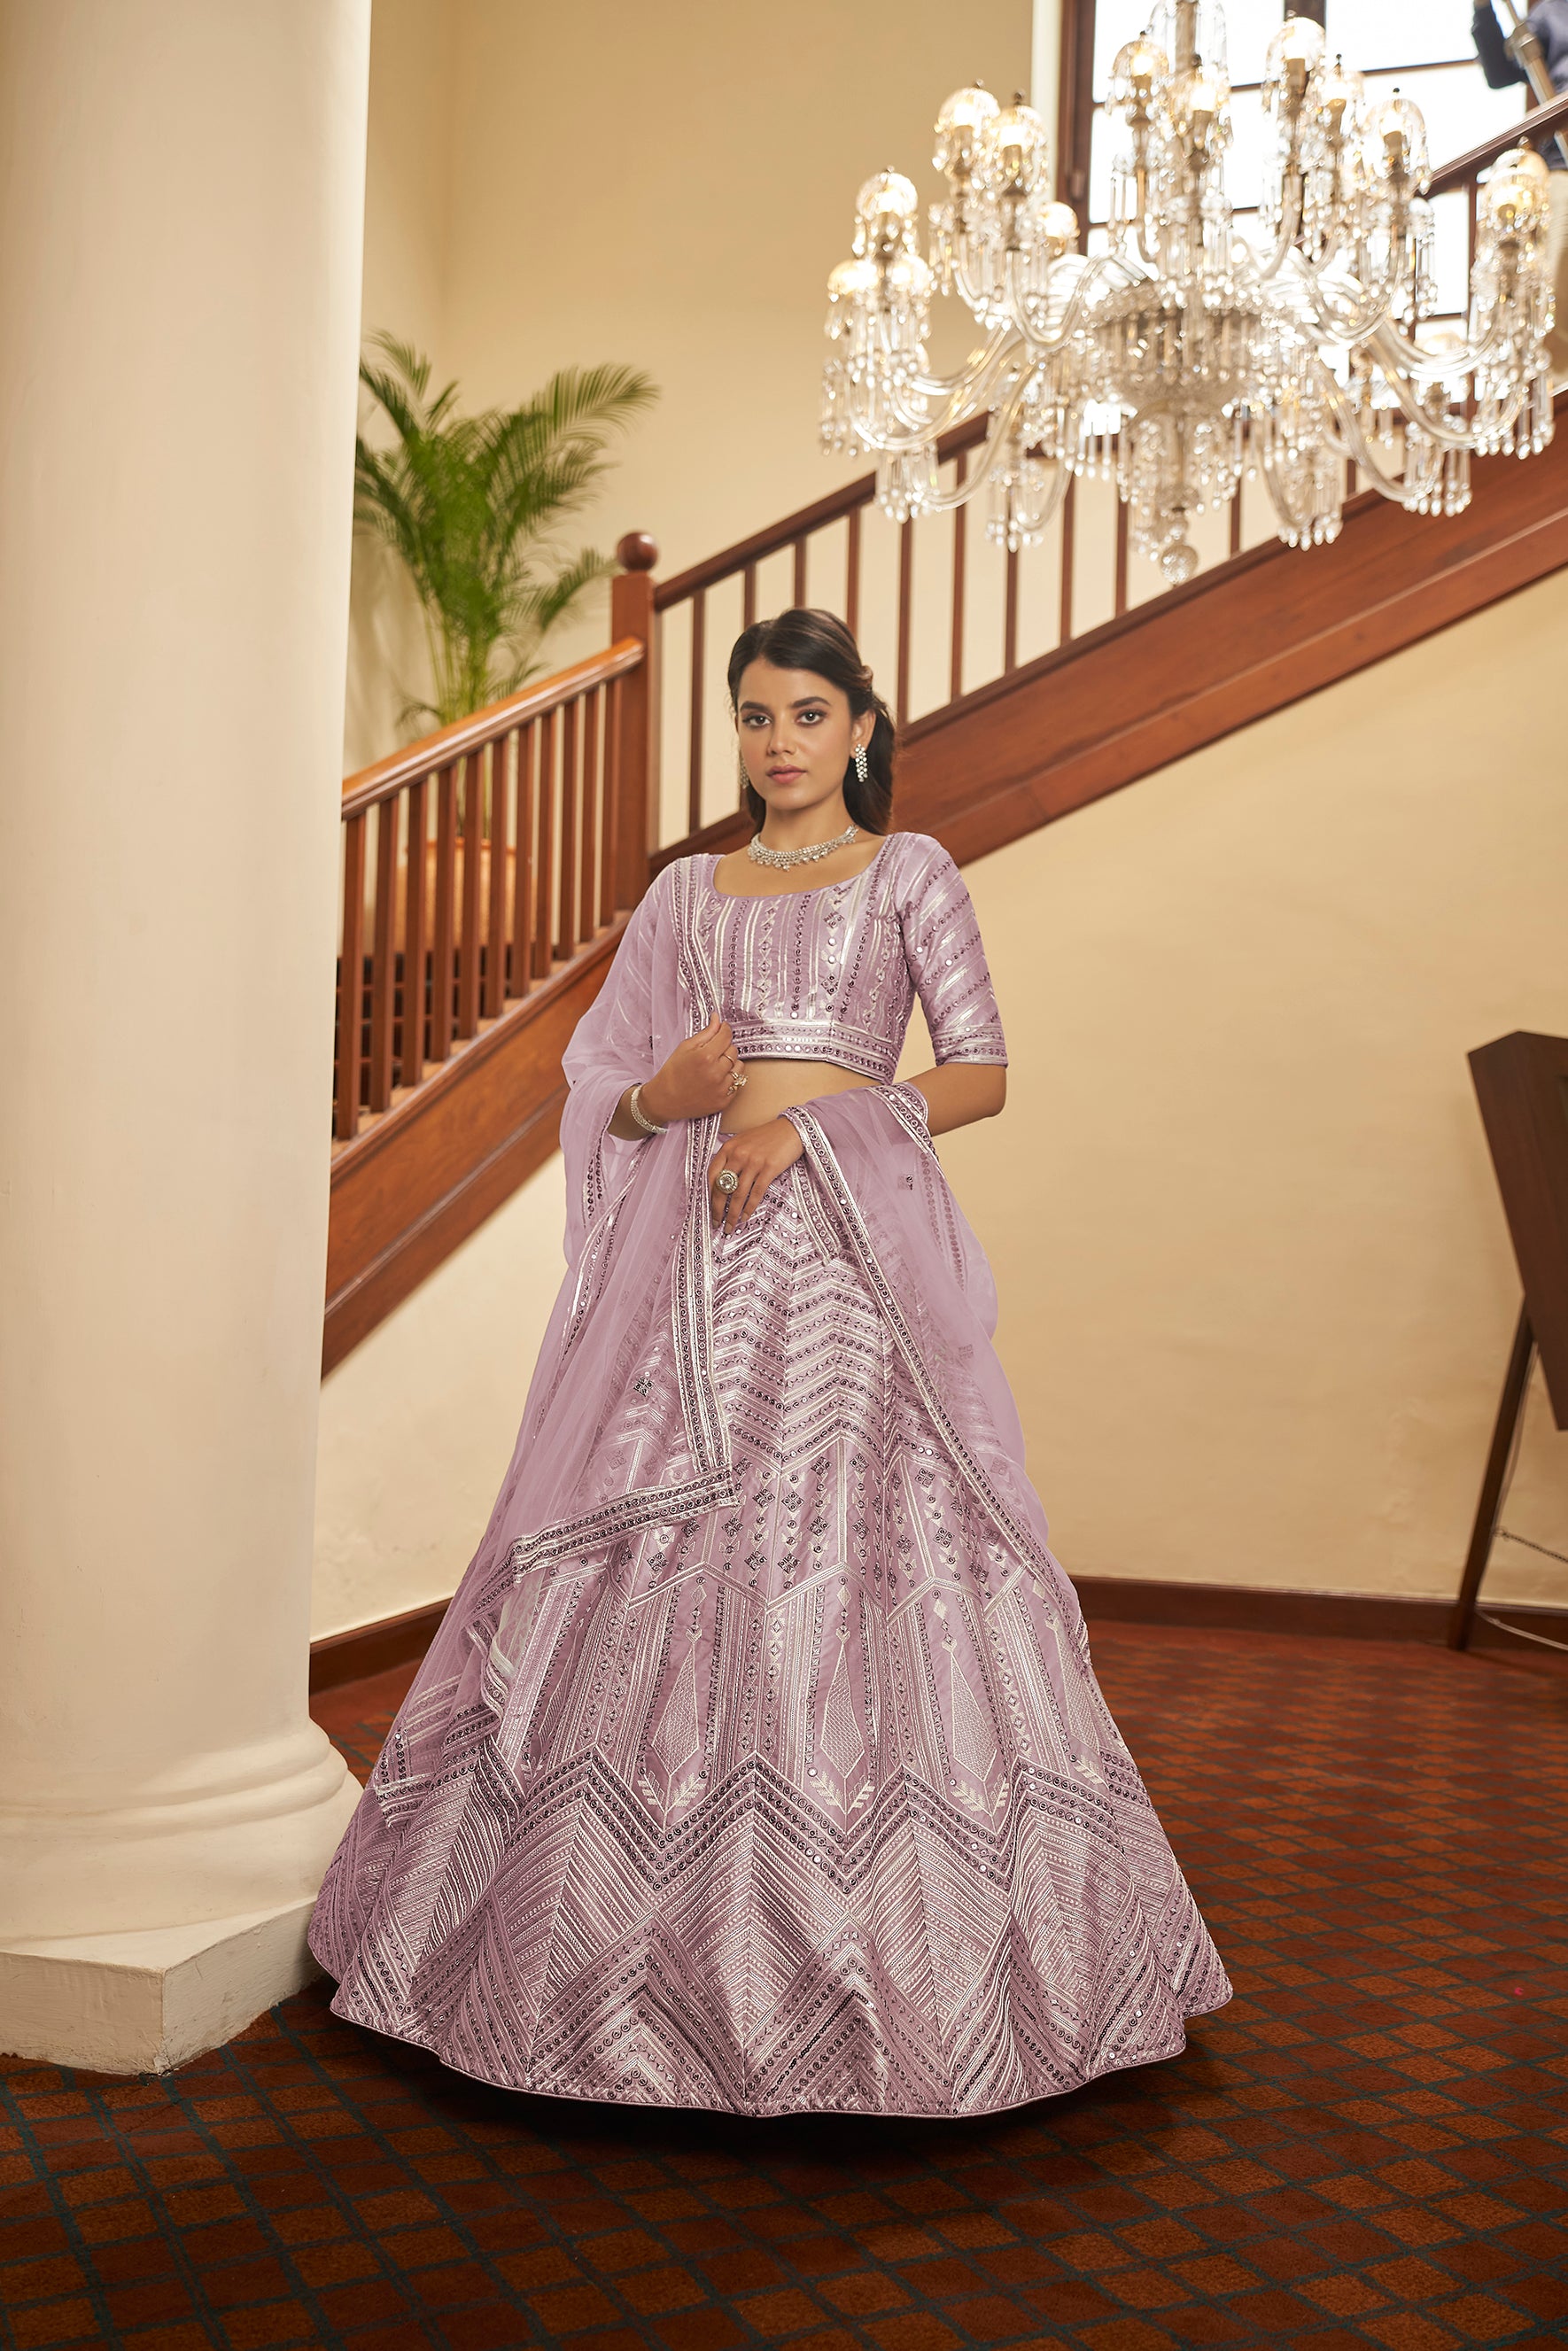 What Not to Wear To an Indian Wedding in Hindi|शादी में काला रंग क्यों नहीं  पहनना चाहिए| Shadi Me Pahanne Chahiye Aise Kapde | what you should not wear  to an indian